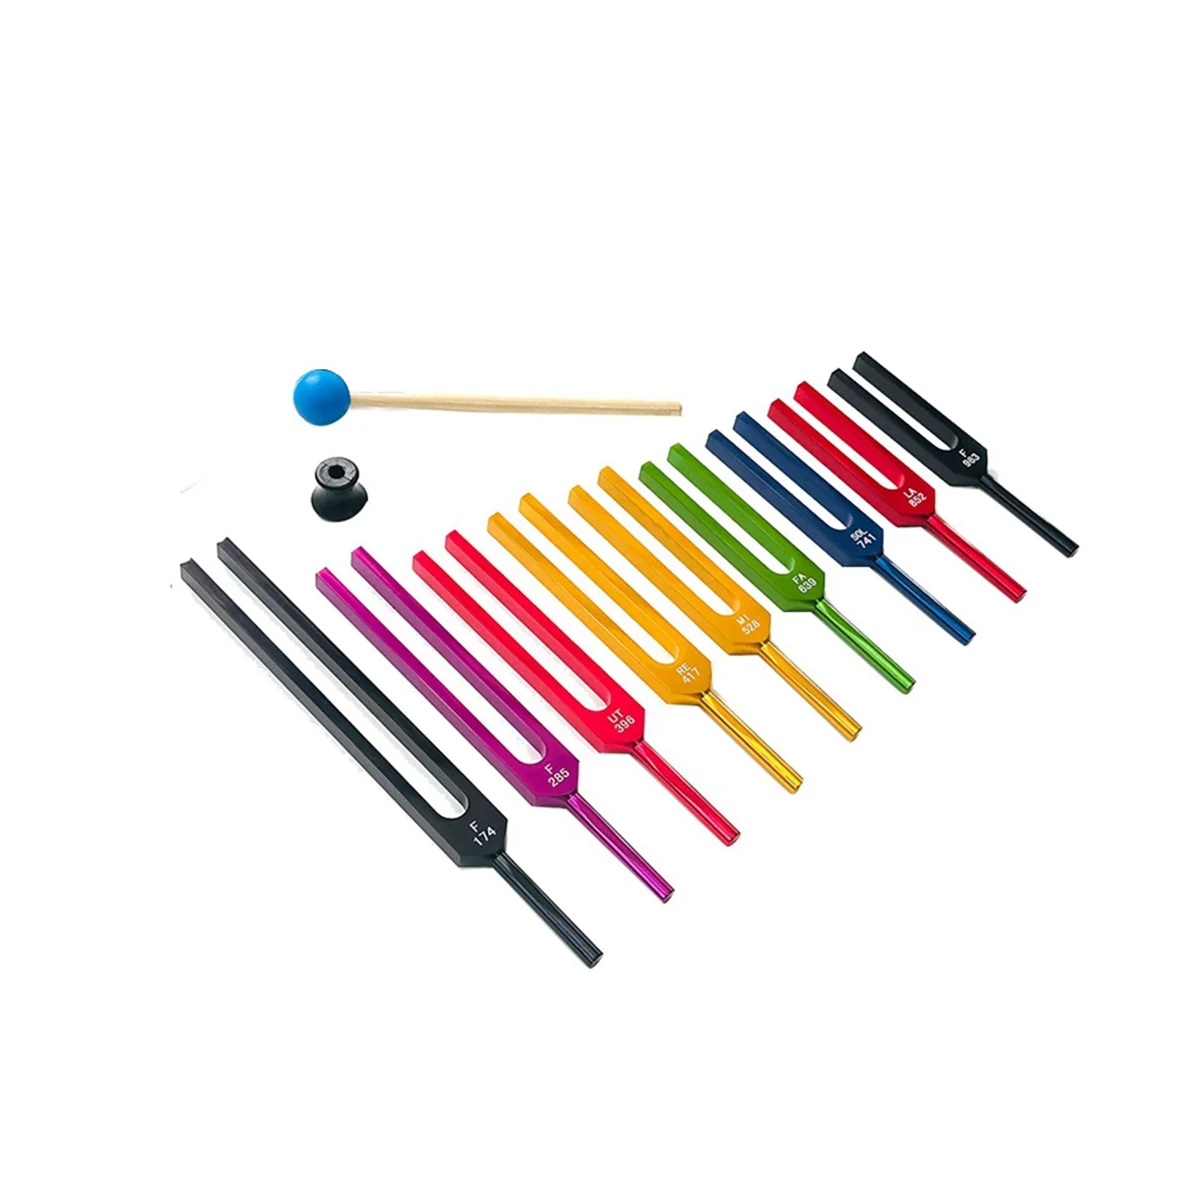 9 Peças Coloridas Solfejo Liga de Alumínio Tuning Forks, Tuning Forks para a Terapia, Terapia de Voz cor-de-Rosa